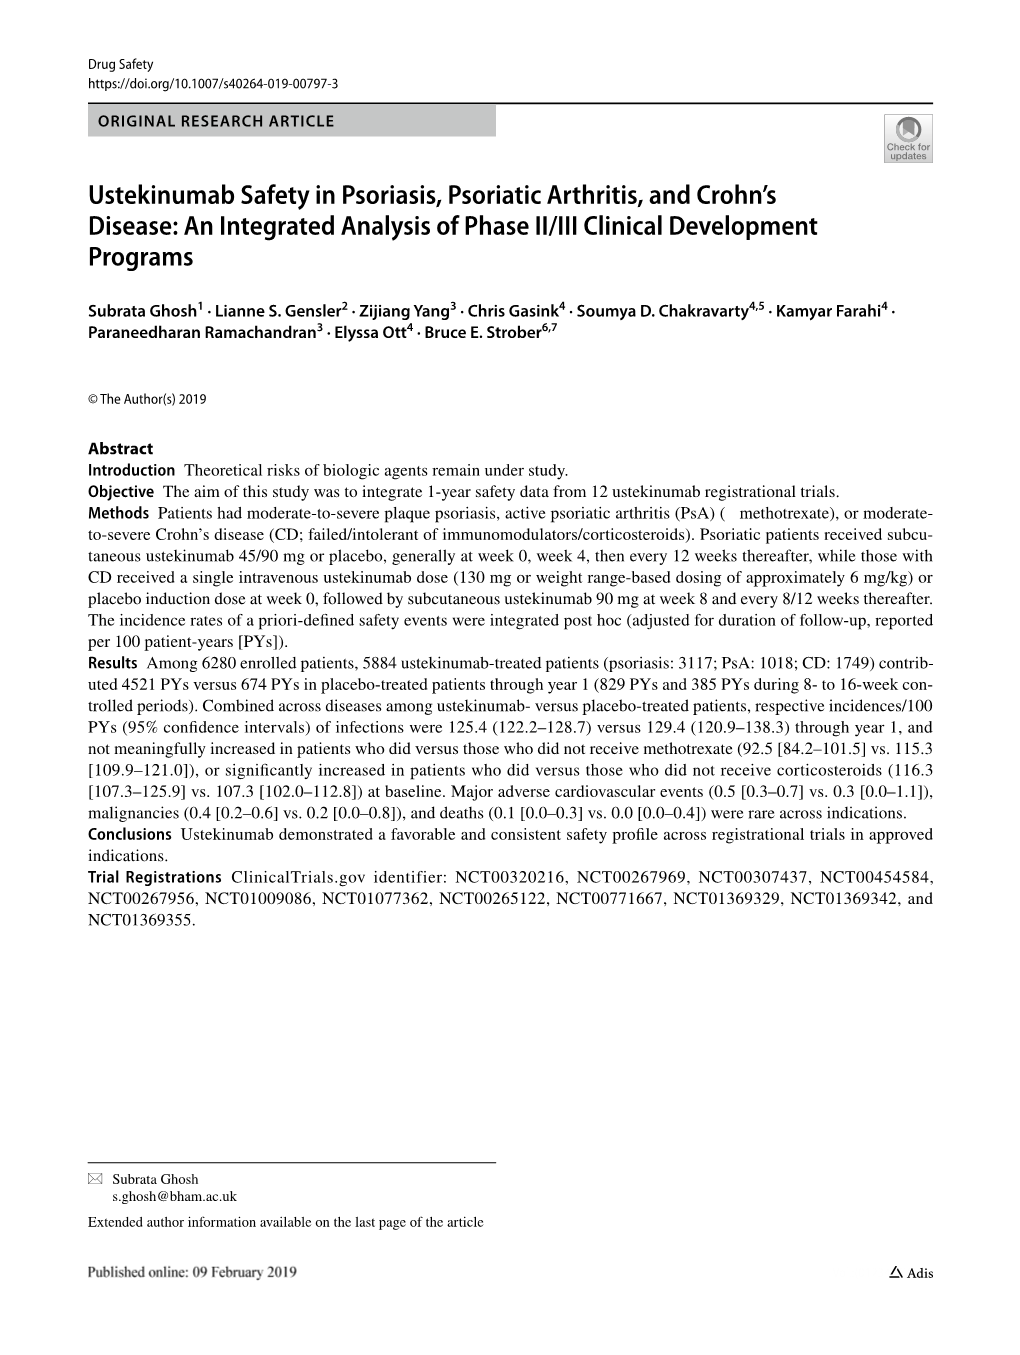 Ustekinumab Safety in Psoriasis, Psoriatic Arthritis, and Crohn's